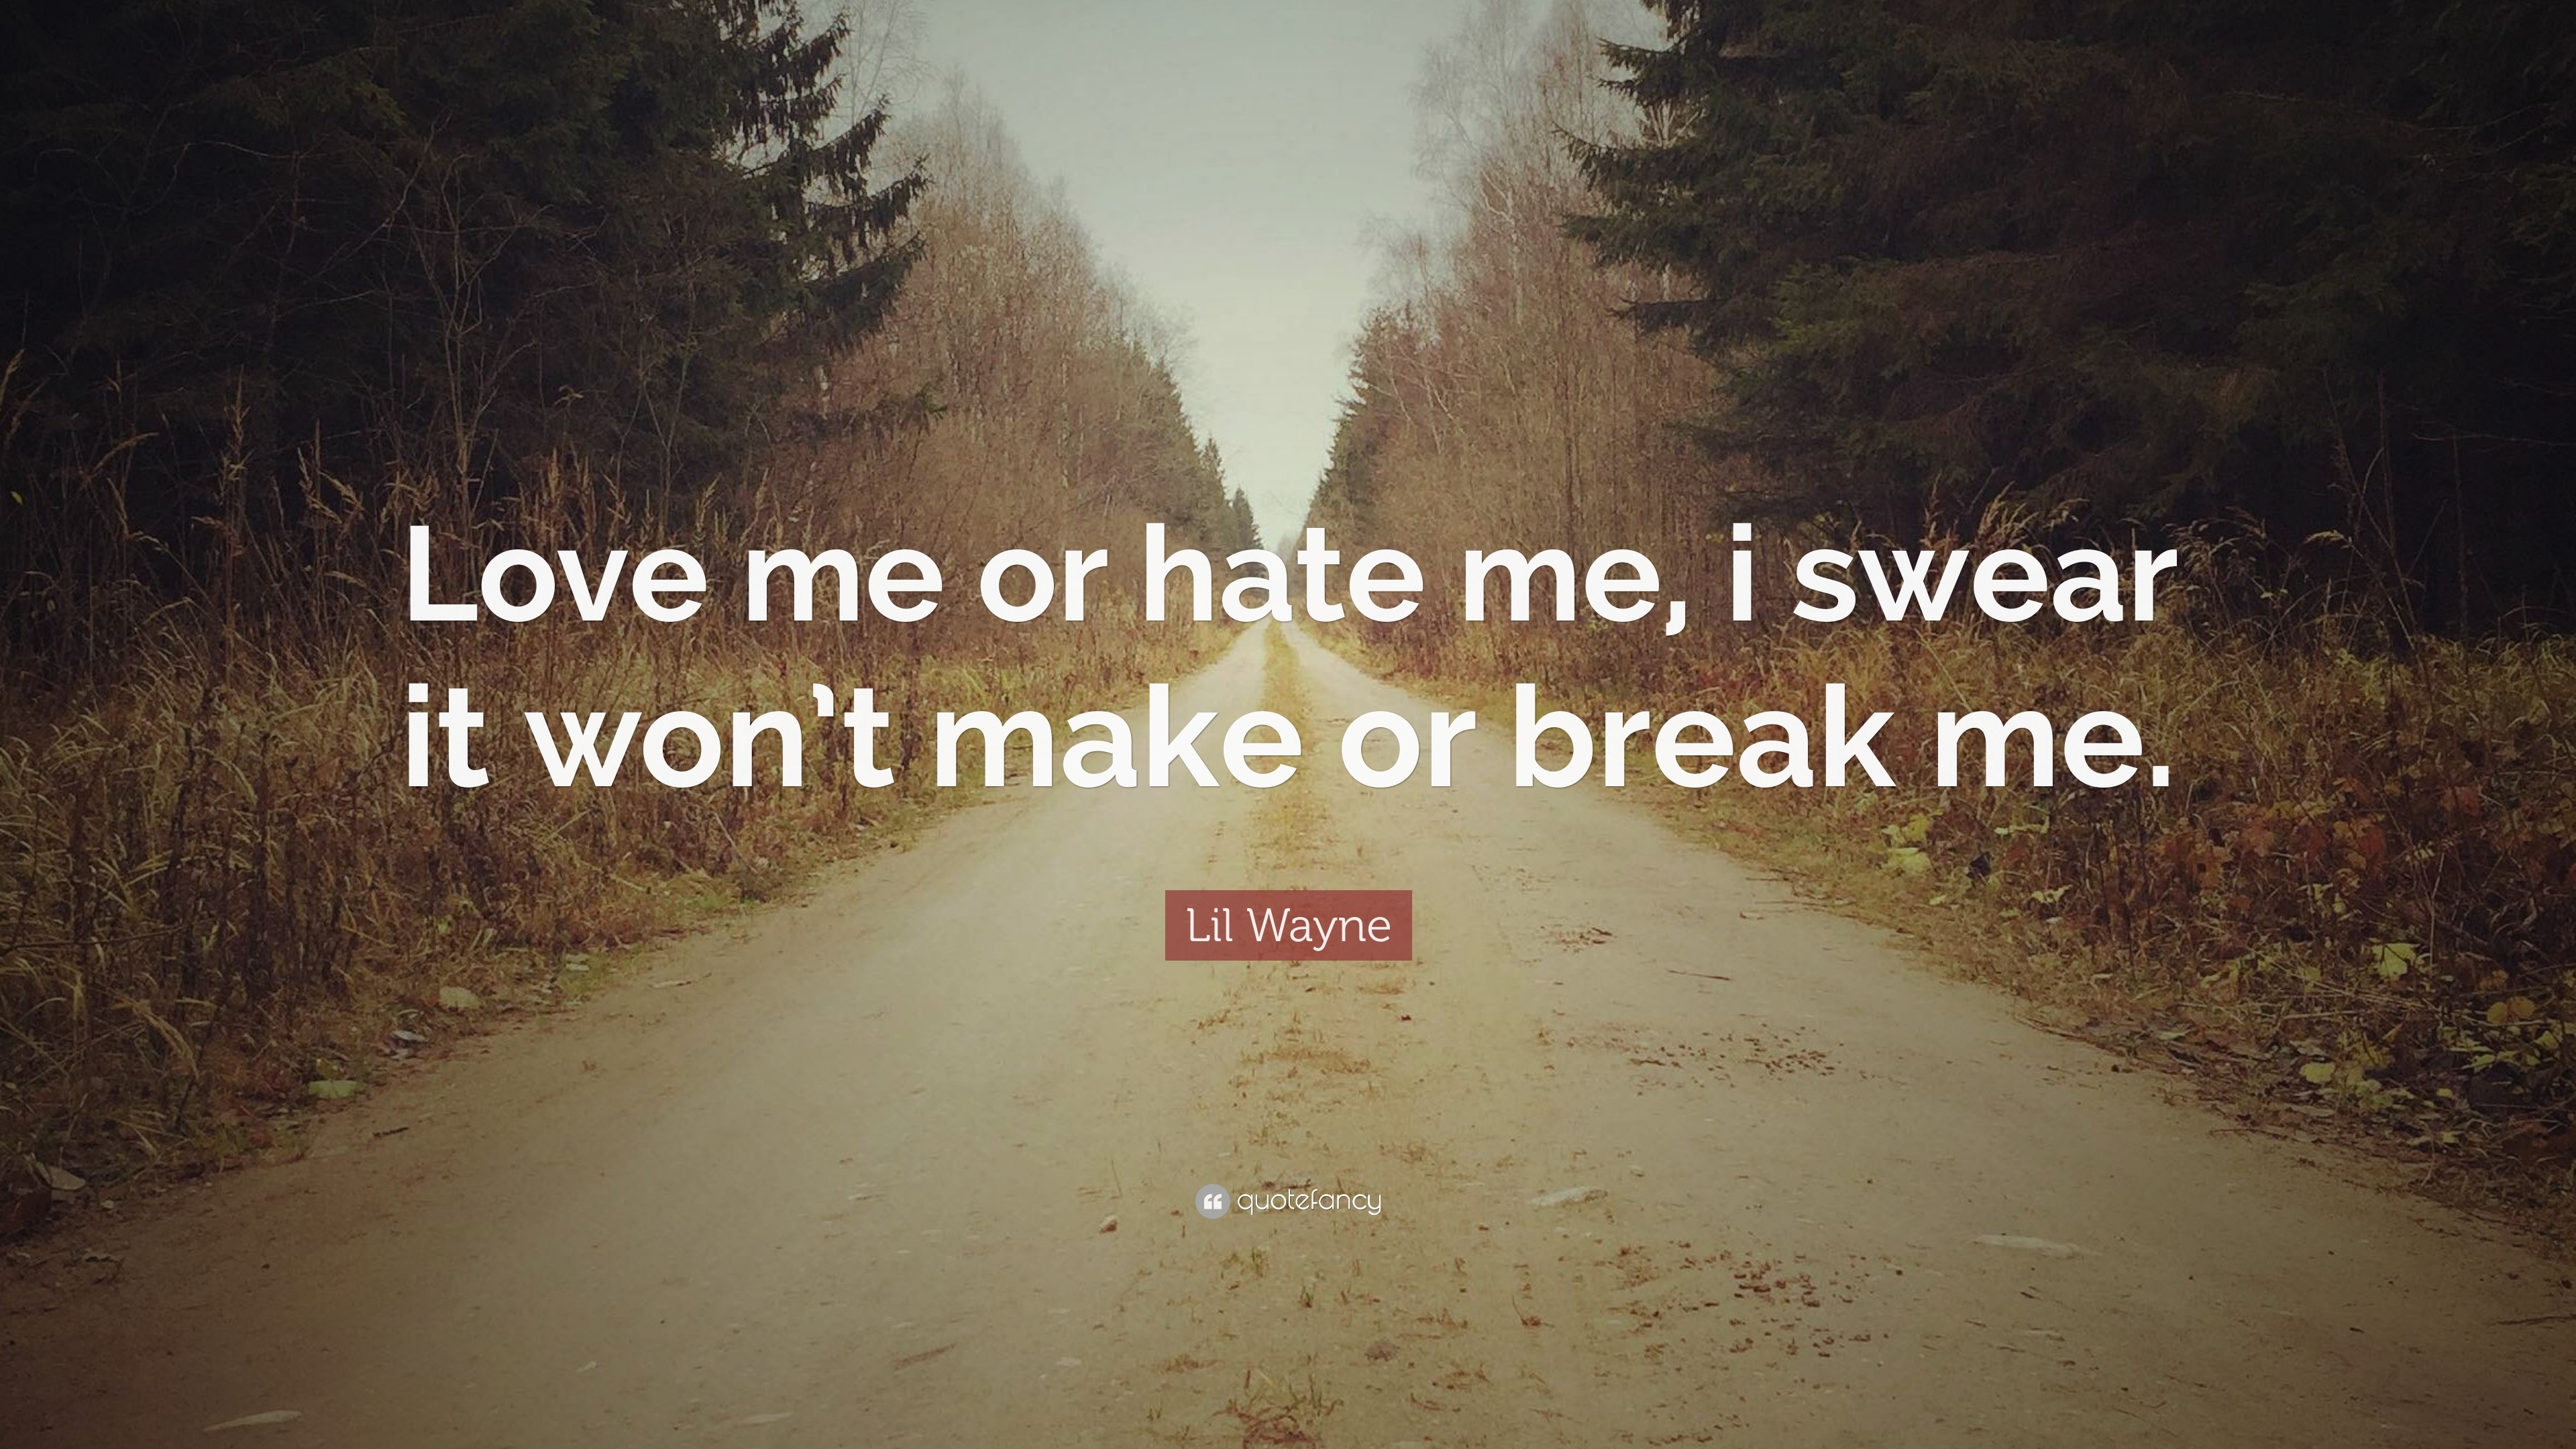 Lil Wayne Quote “Love me or hate me i swear it won